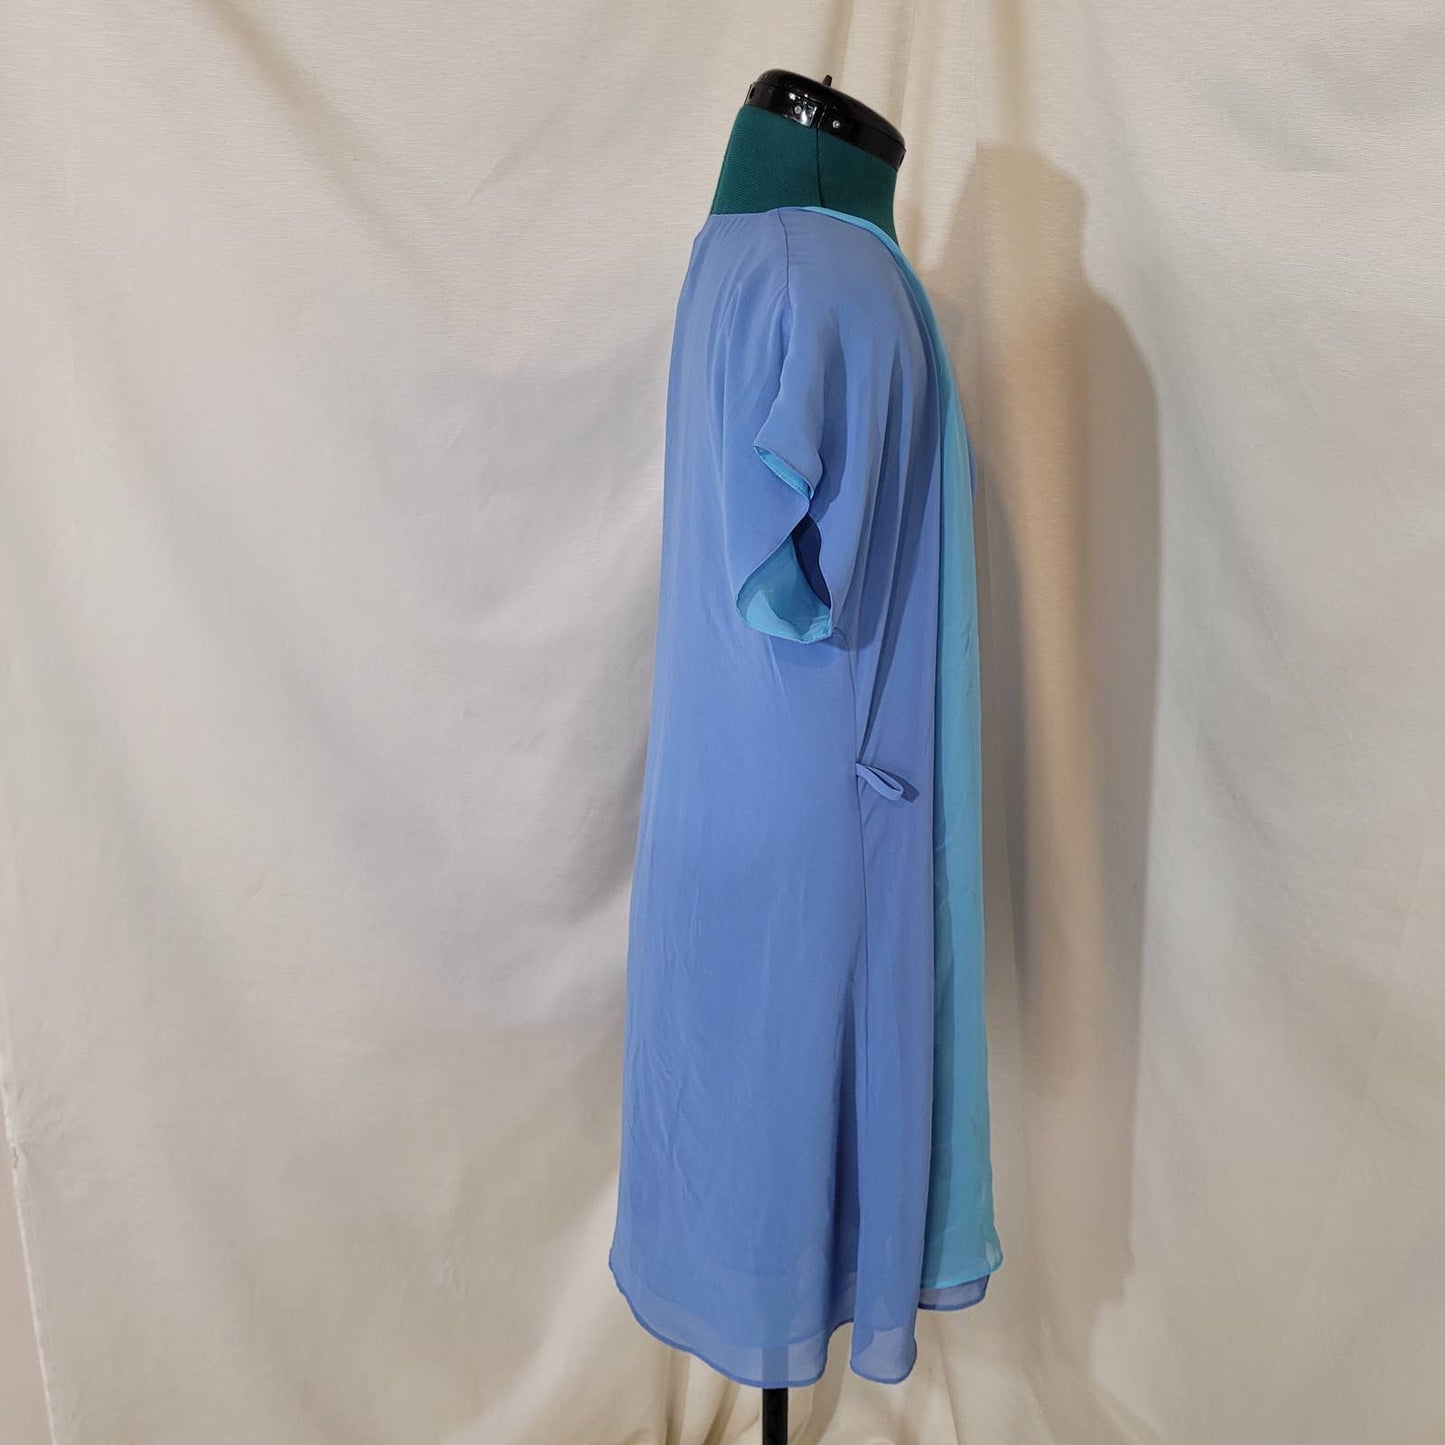 Amelia's Blue Chiffon Robe and Nightgown Set Embroidered Flowers - Size SmallMarkita's ClosetAmelia's